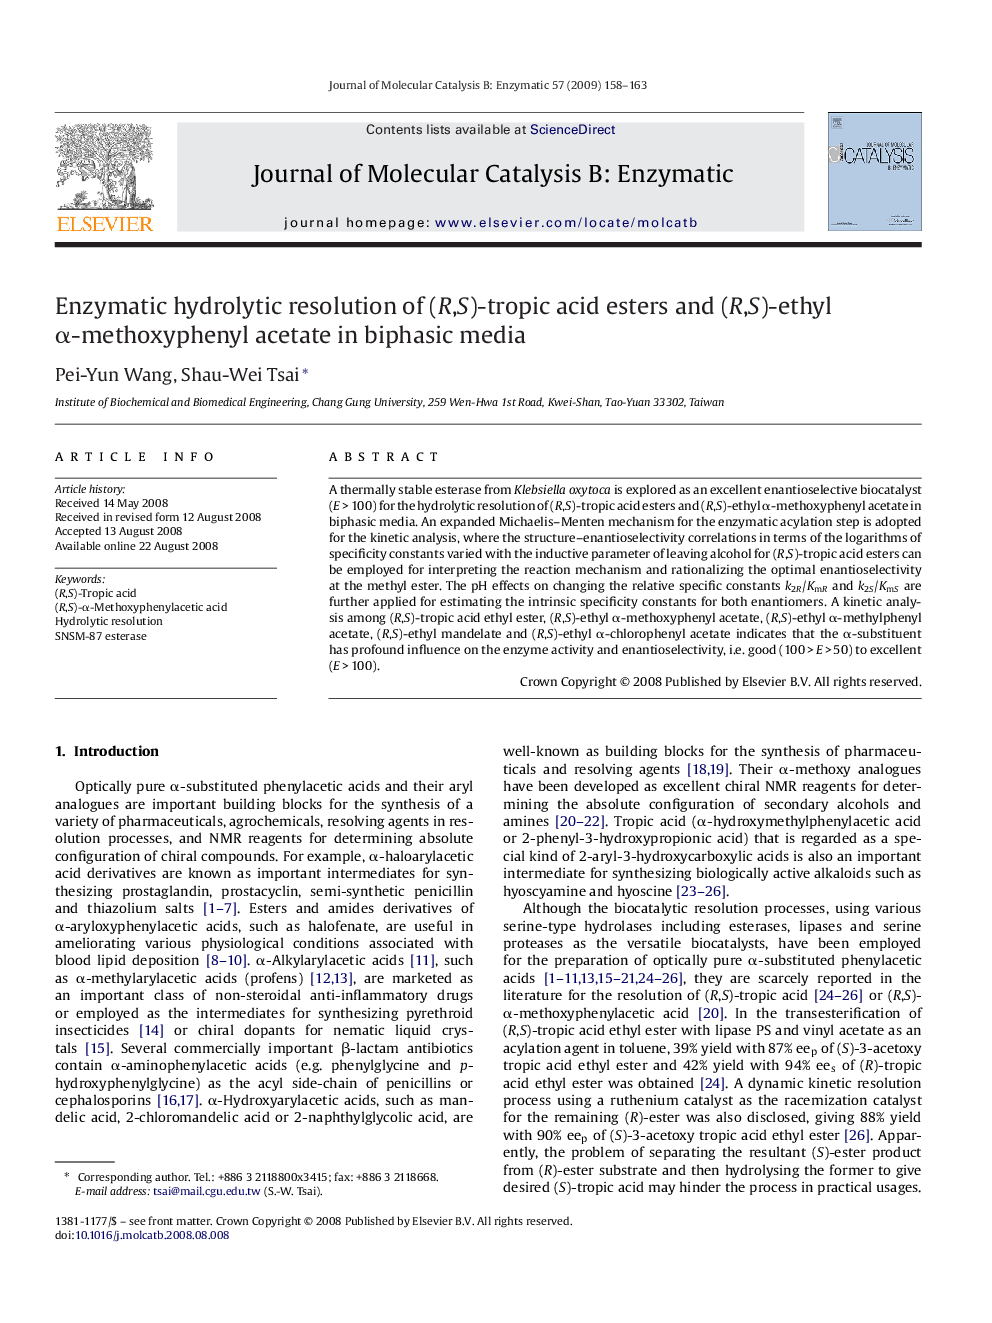 Enzymatic hydrolytic resolution of (R,S)-tropic acid esters and (R,S)-ethyl α-methoxyphenyl acetate in biphasic media